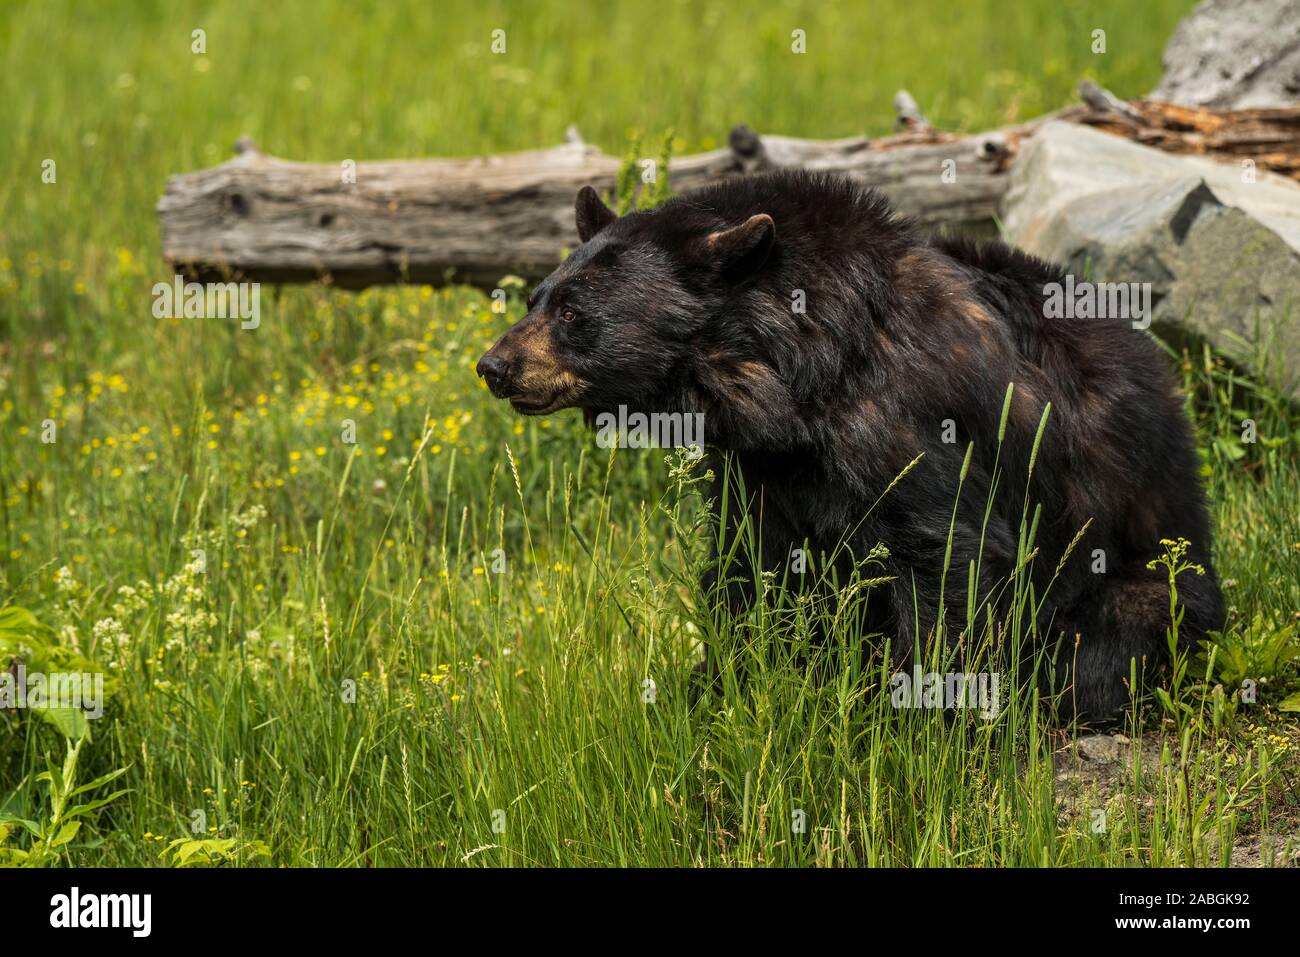 A Black Bear sitting in the green grass beside a fallen tree. Stock Photo